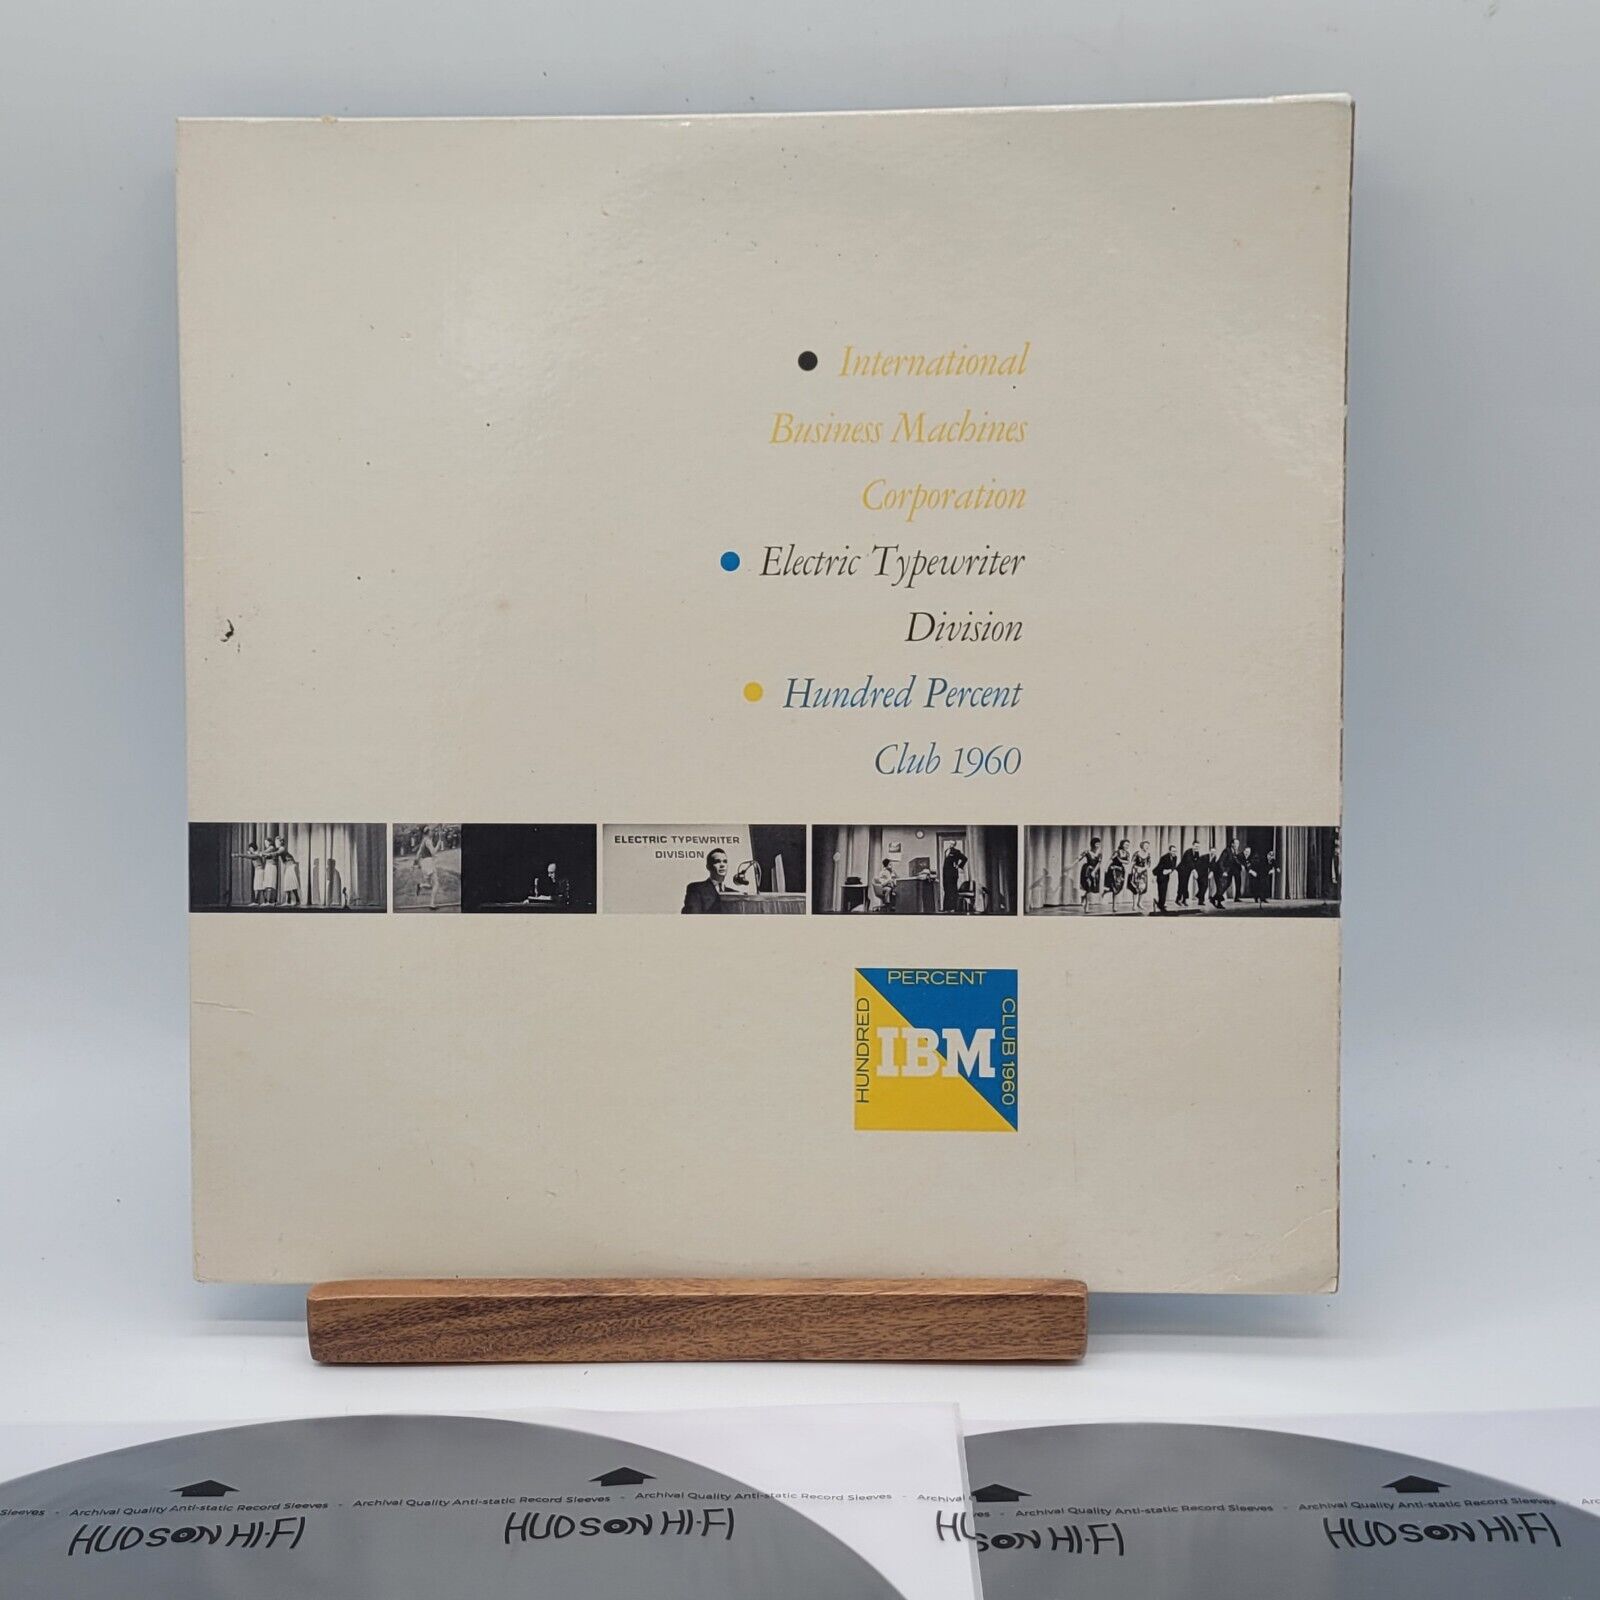 IBM HUNDRED PERCENT CLUB TYPEWRITING DIVISION 2X LP RECORD ALBUM VINYL GATEFOLD 